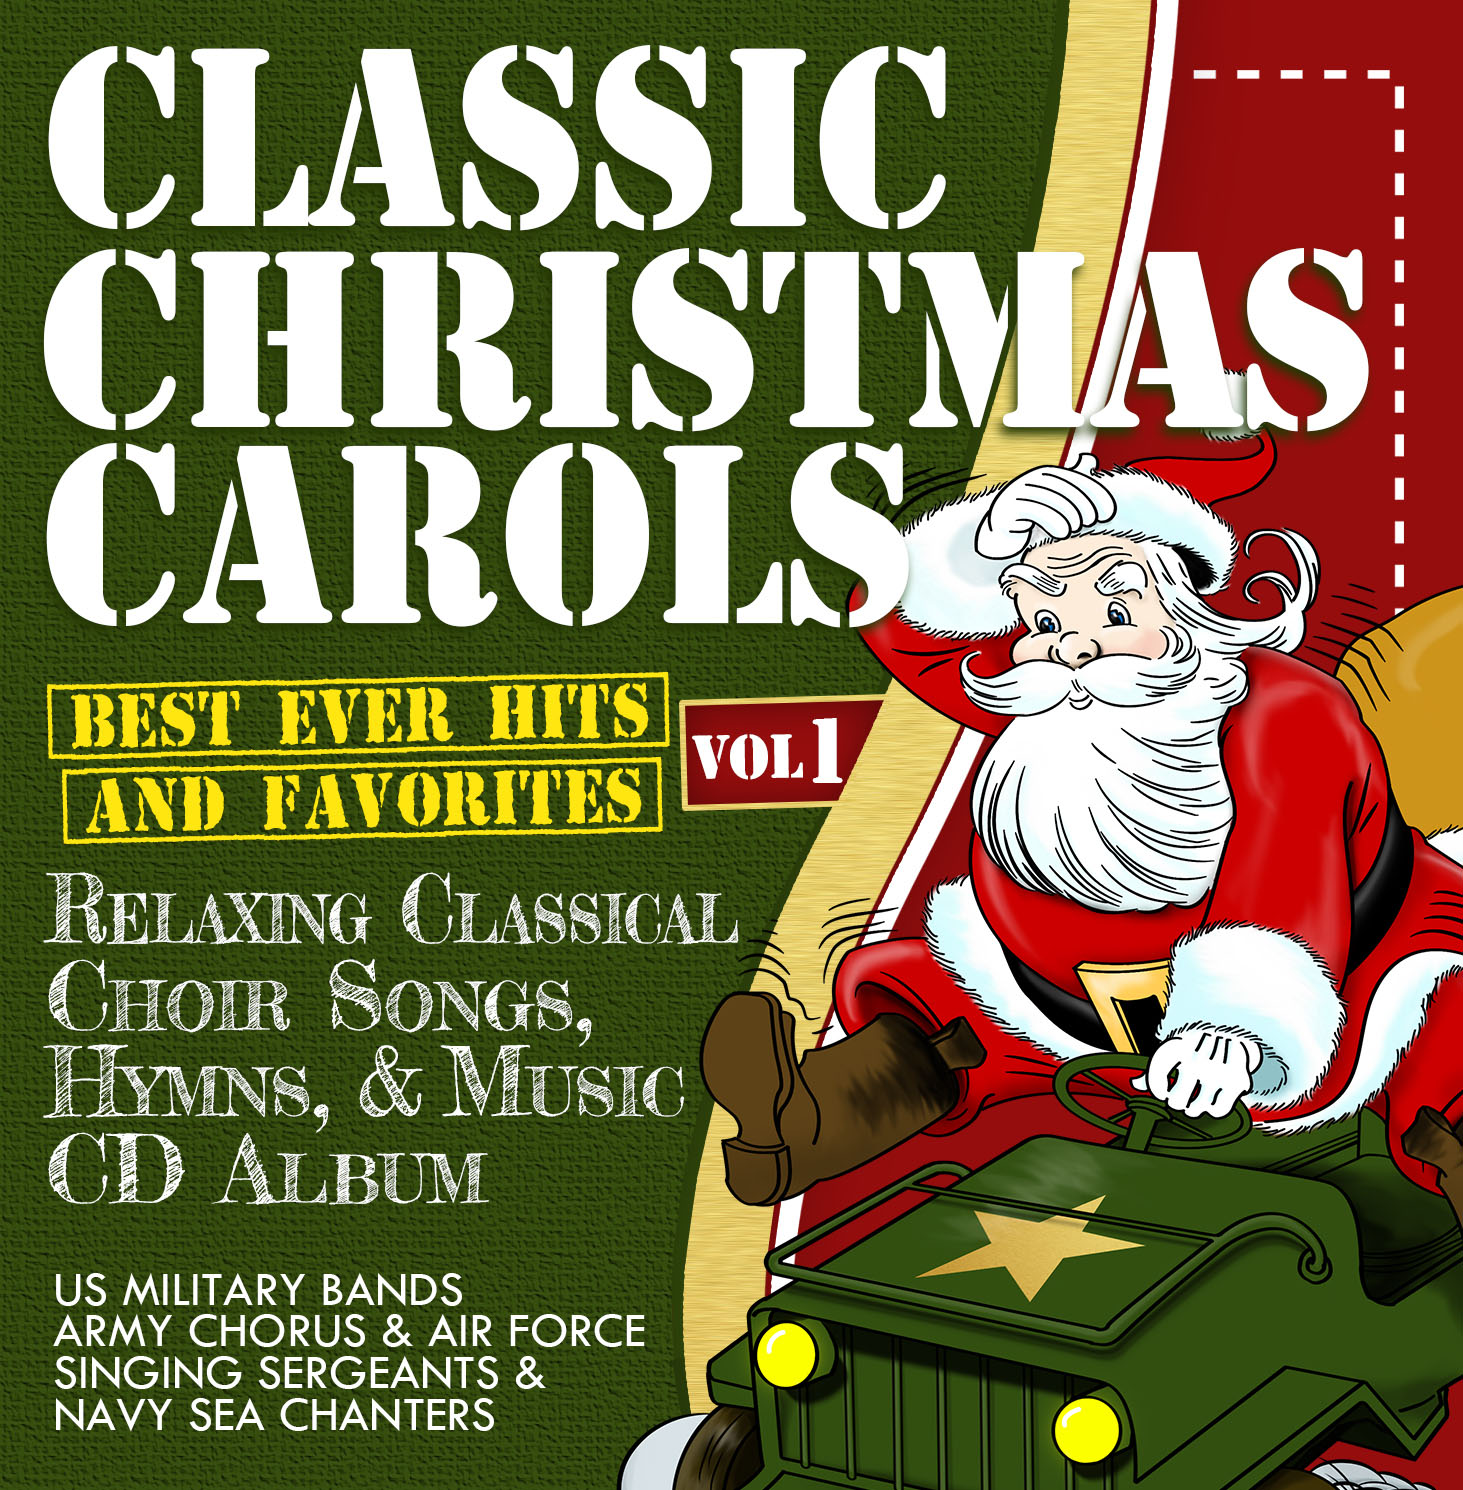 Classic Christmas Carols (Best Ever Hits & Favorites) Volume 1